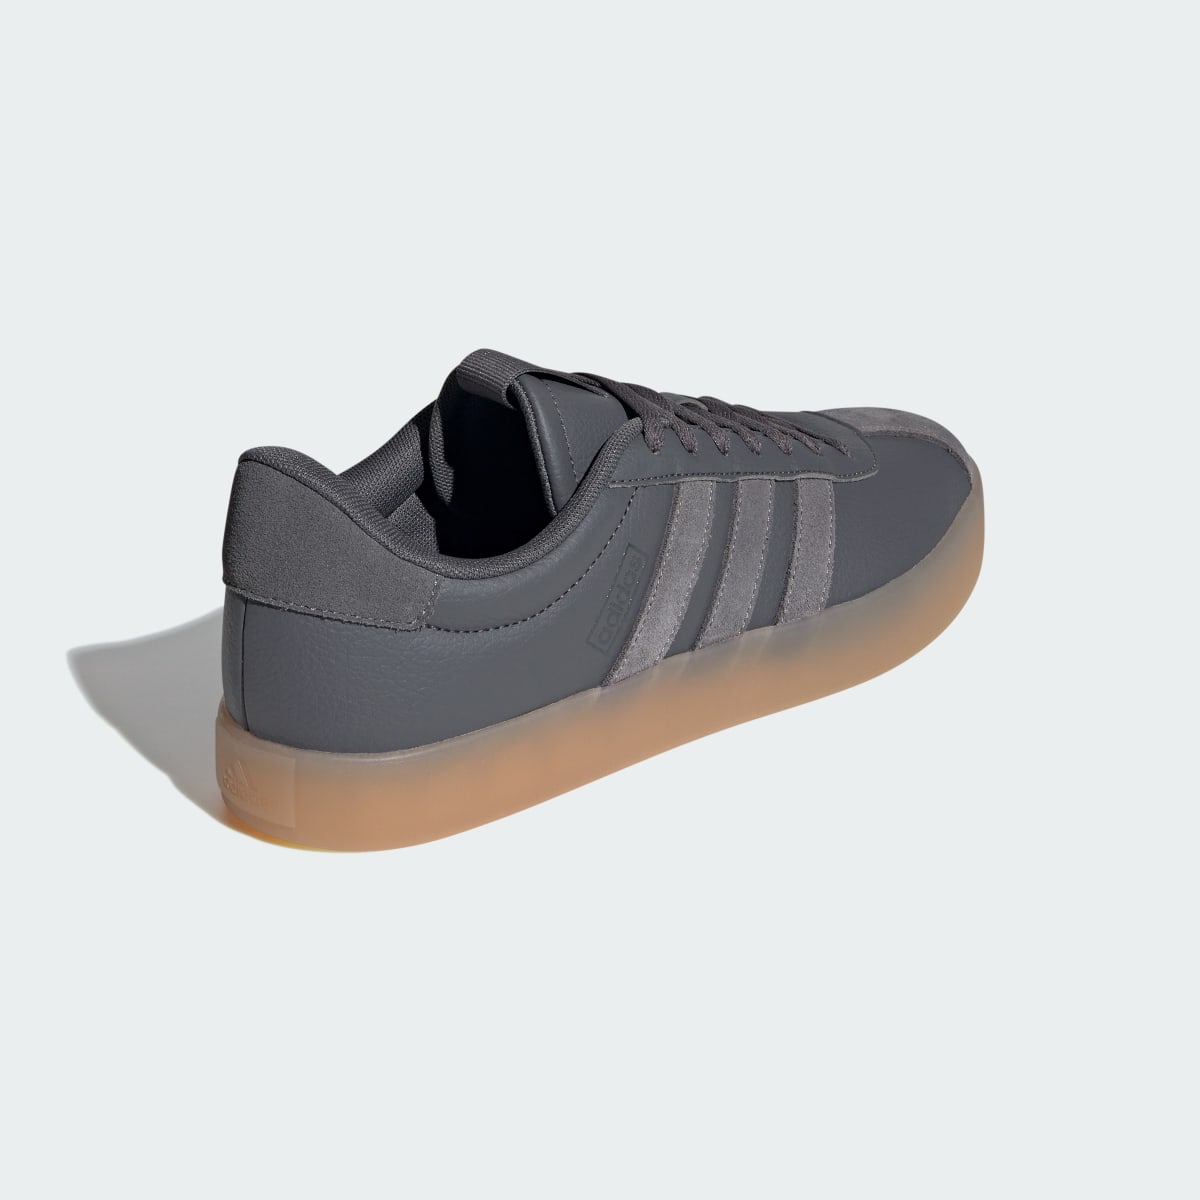 Adidas VL Court 3.0 Shoes. 6